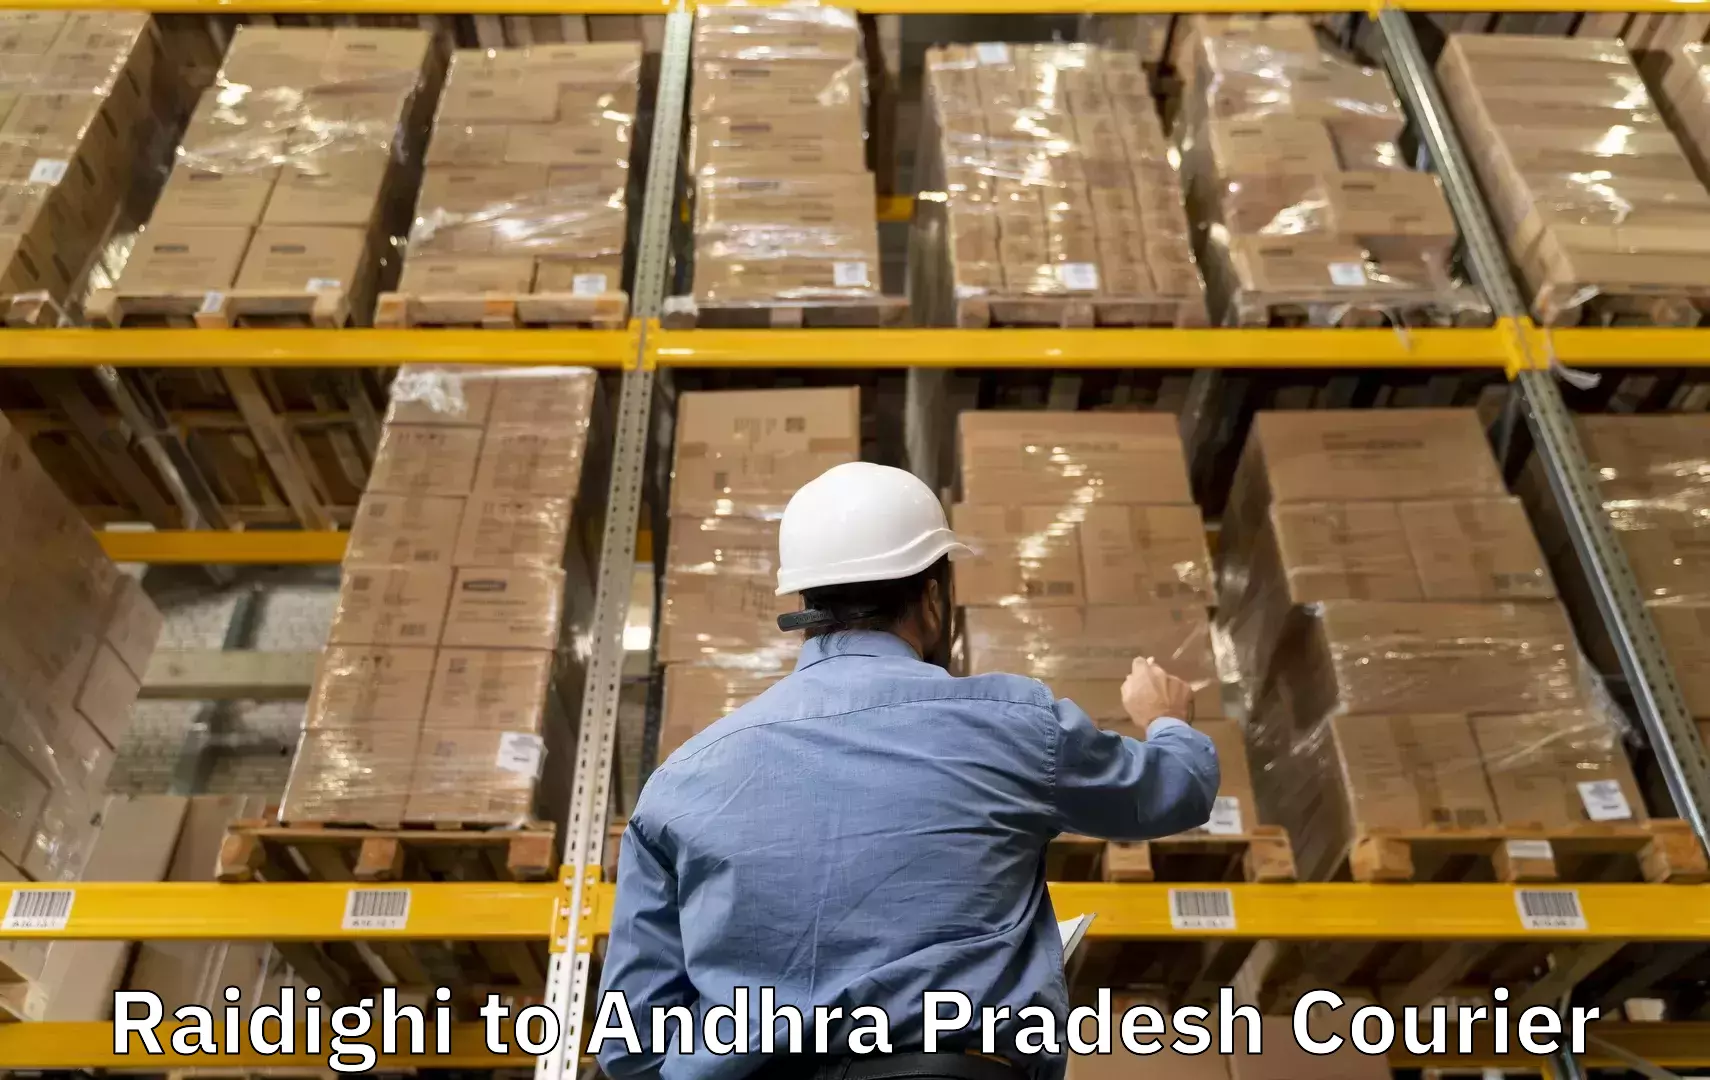 Personal effects shipping in Raidighi to Guntur